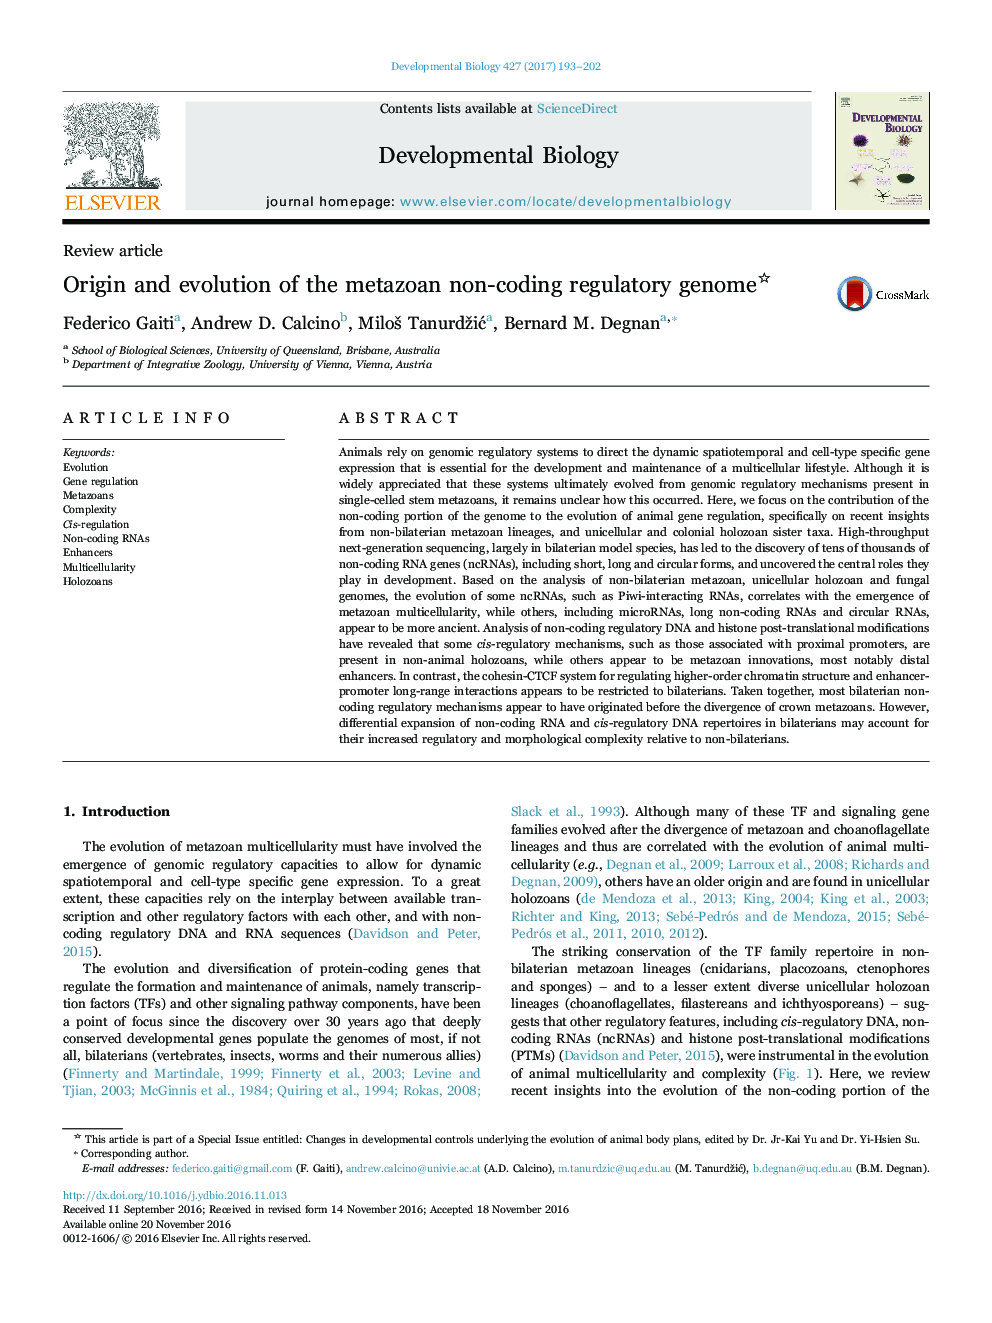 Review articleOrigin and evolution of the metazoan non-coding regulatory genome